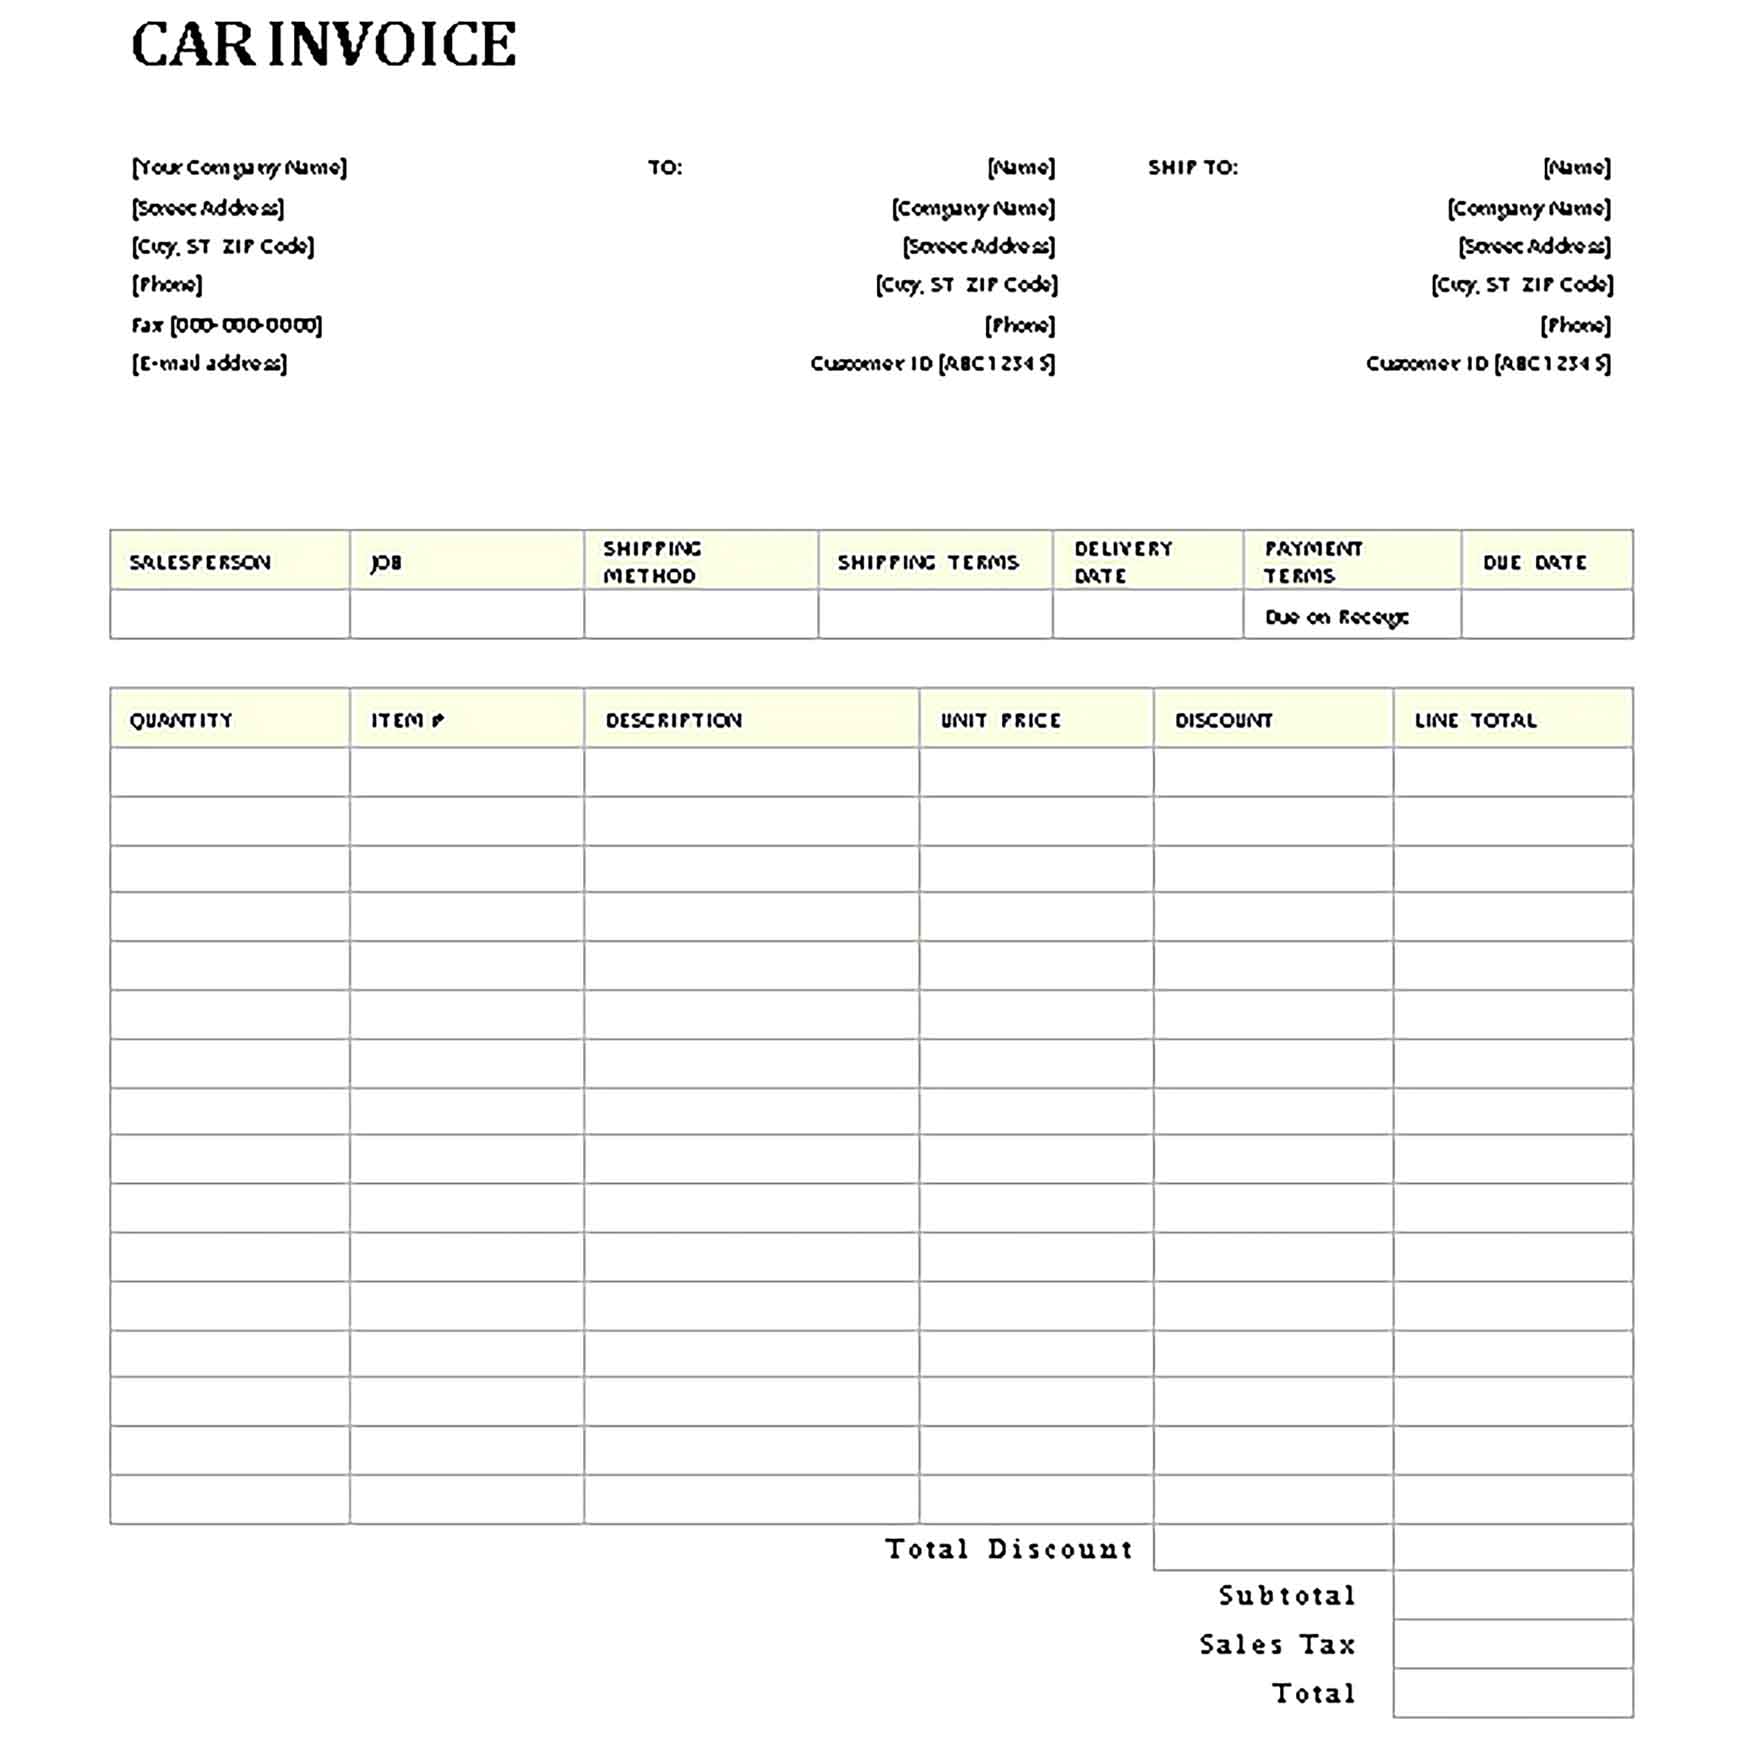 Sample Templates car invoice 002